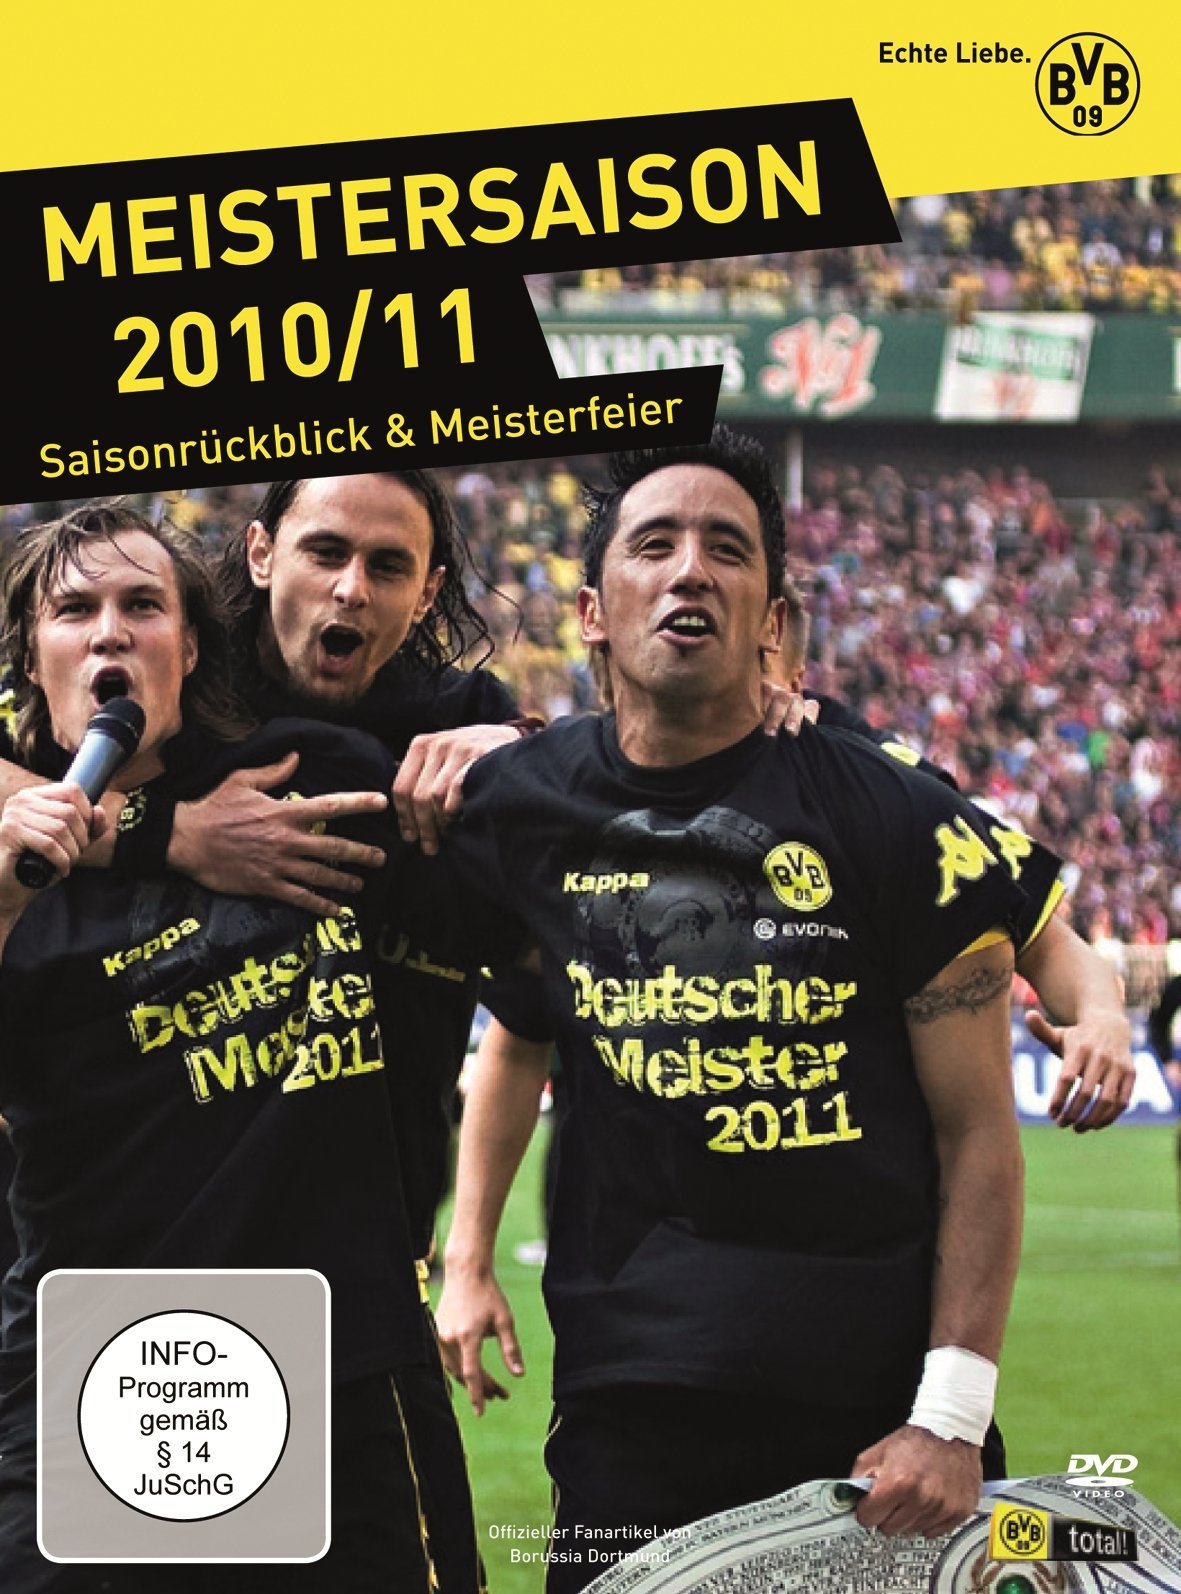 BVB 09 - Meistersaison 2010/11: Saisonrückblick & Meisterfeier